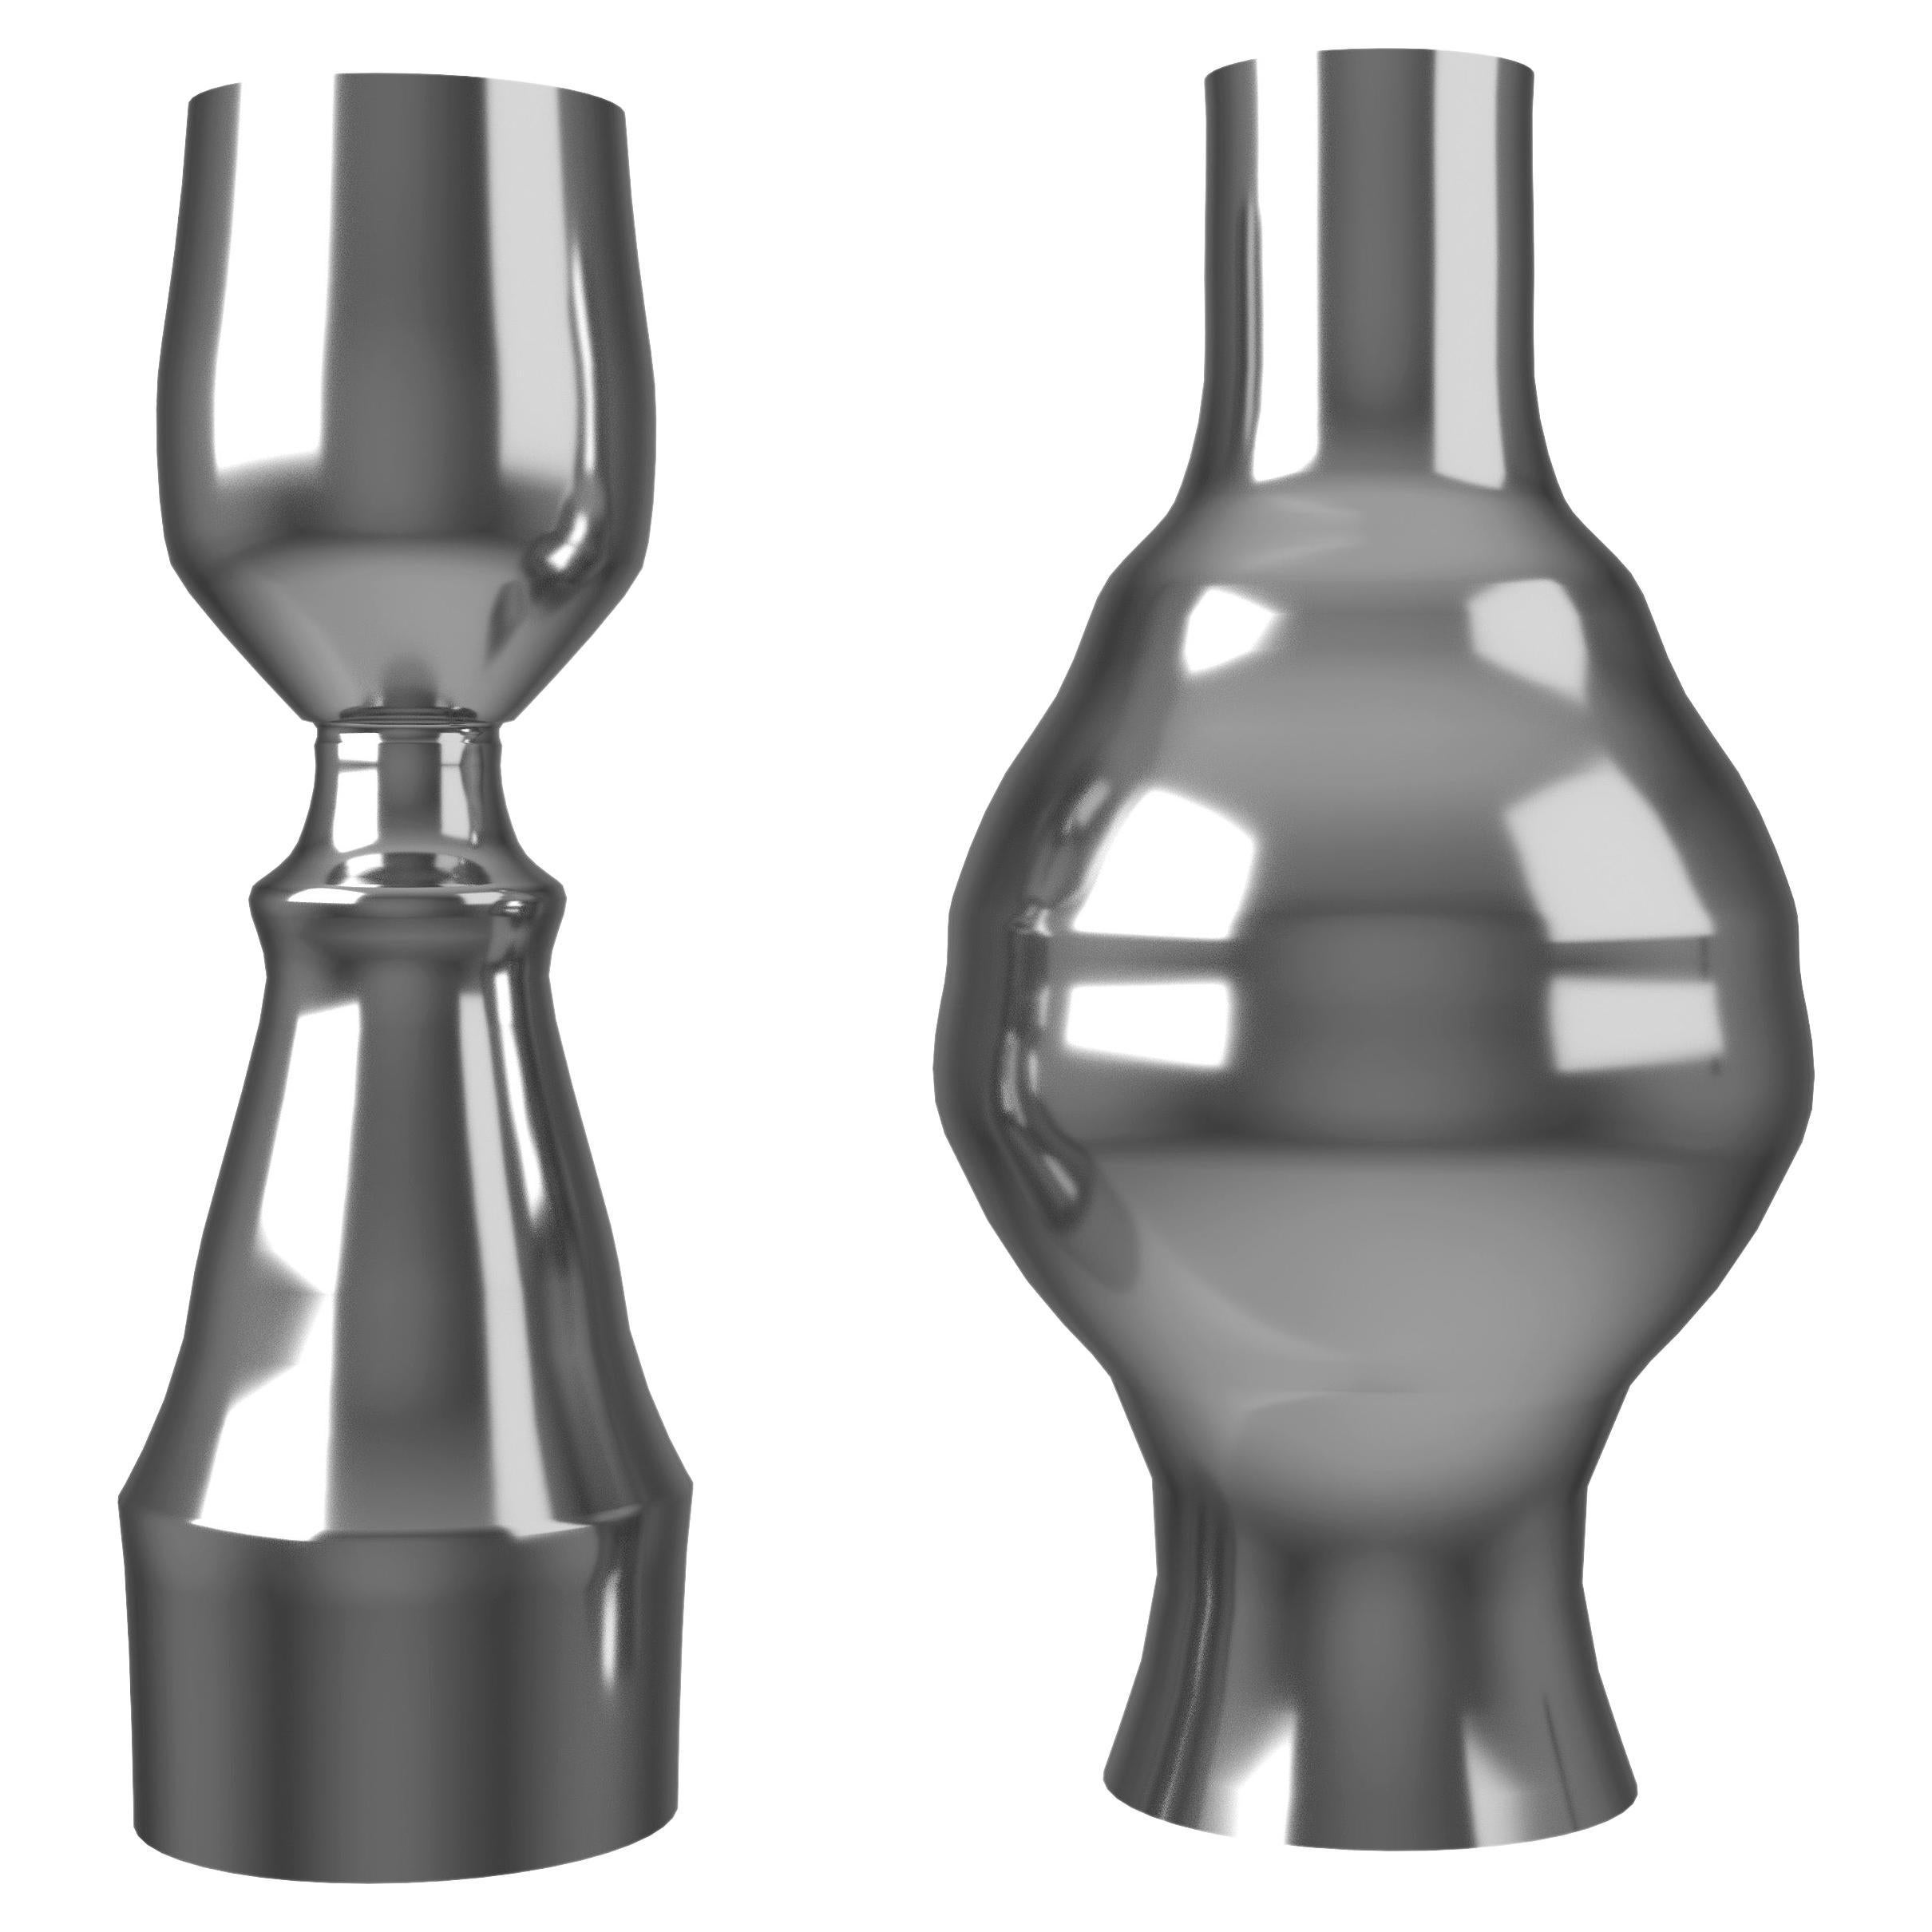  Inamorata Pair of polished aluminum vases